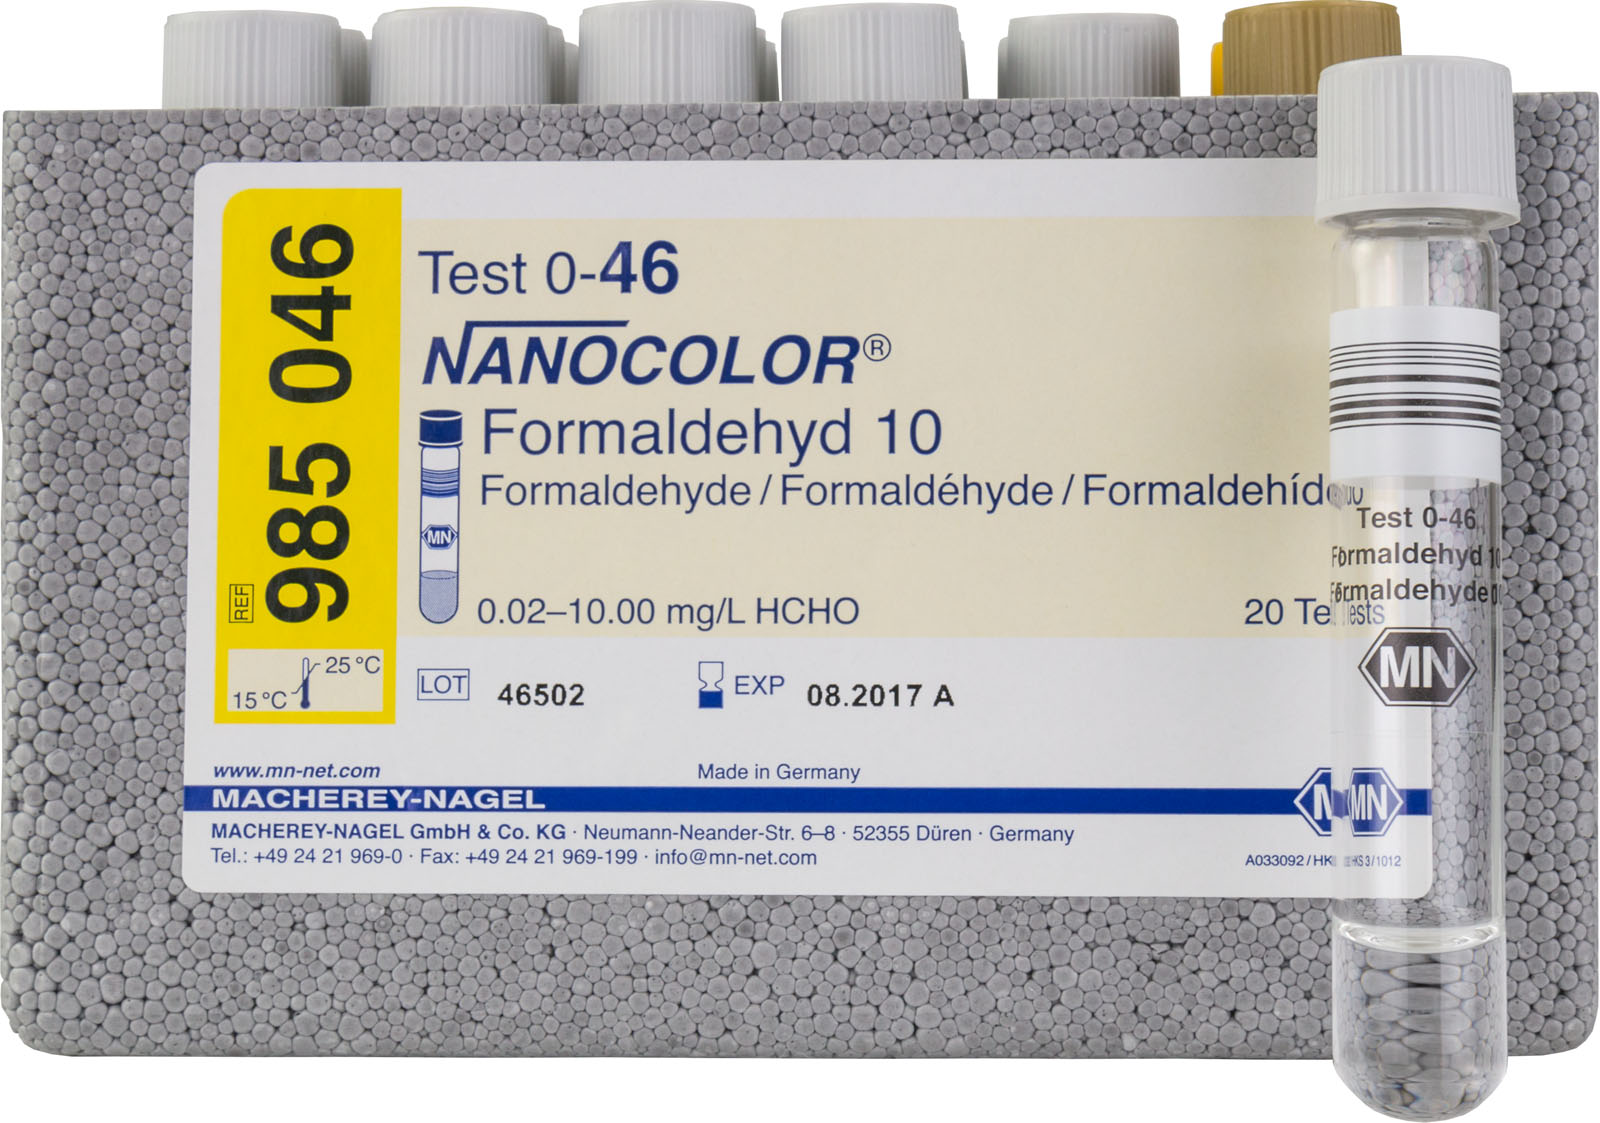 RUK NANOCOLOR- Formaldehyd 10 Test